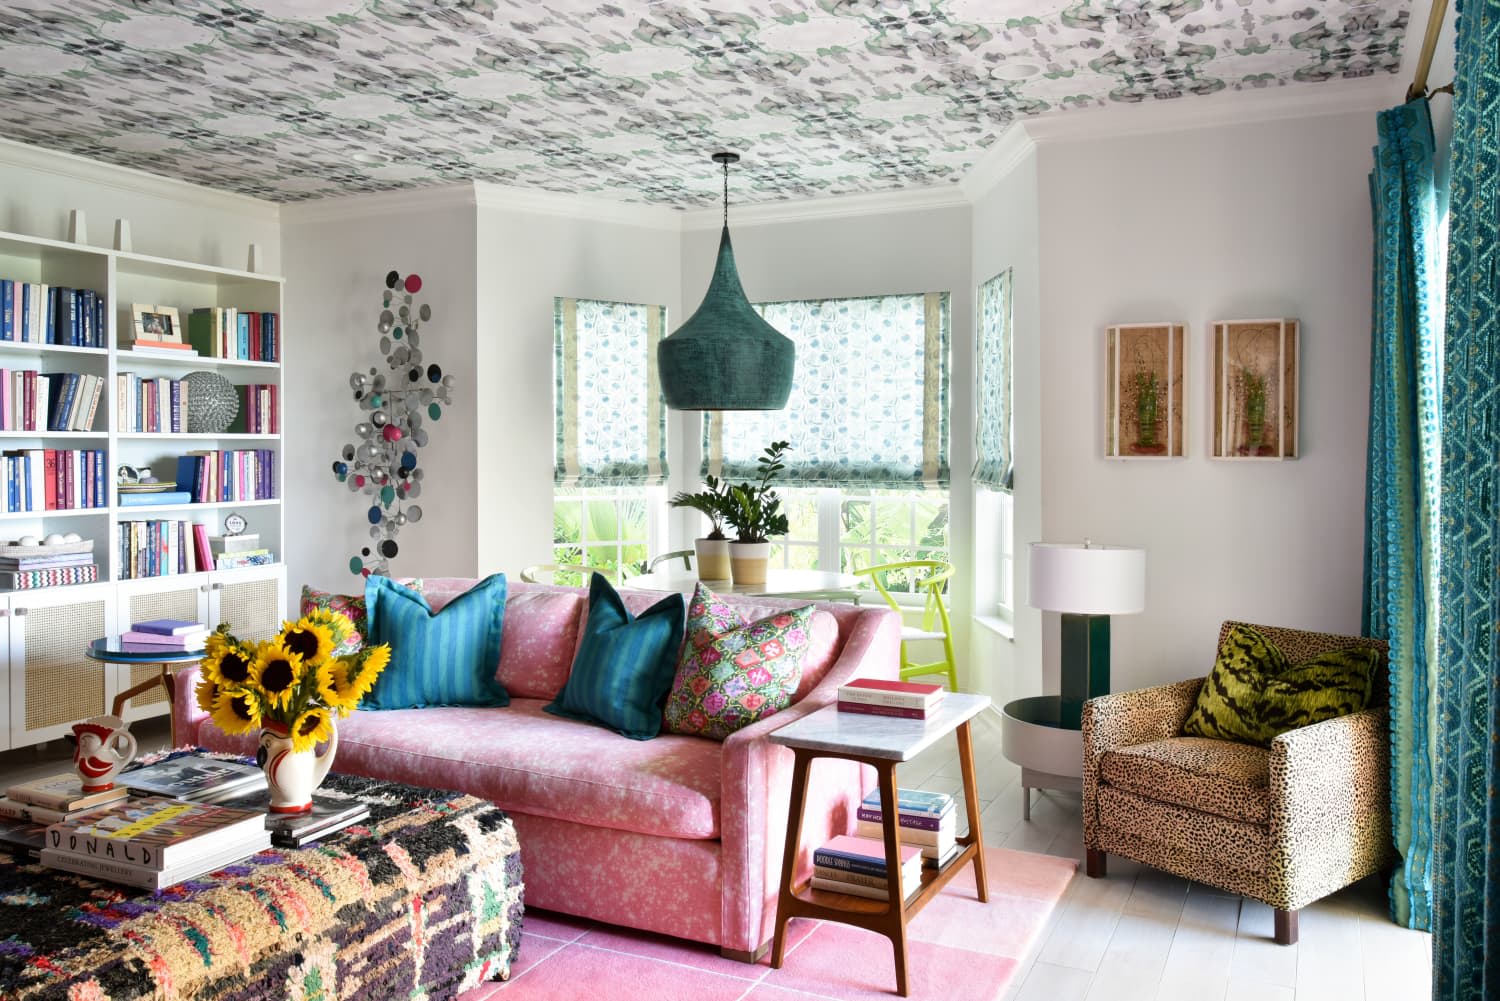 The Best Living Room Floor Ideas, According to Interior Designers